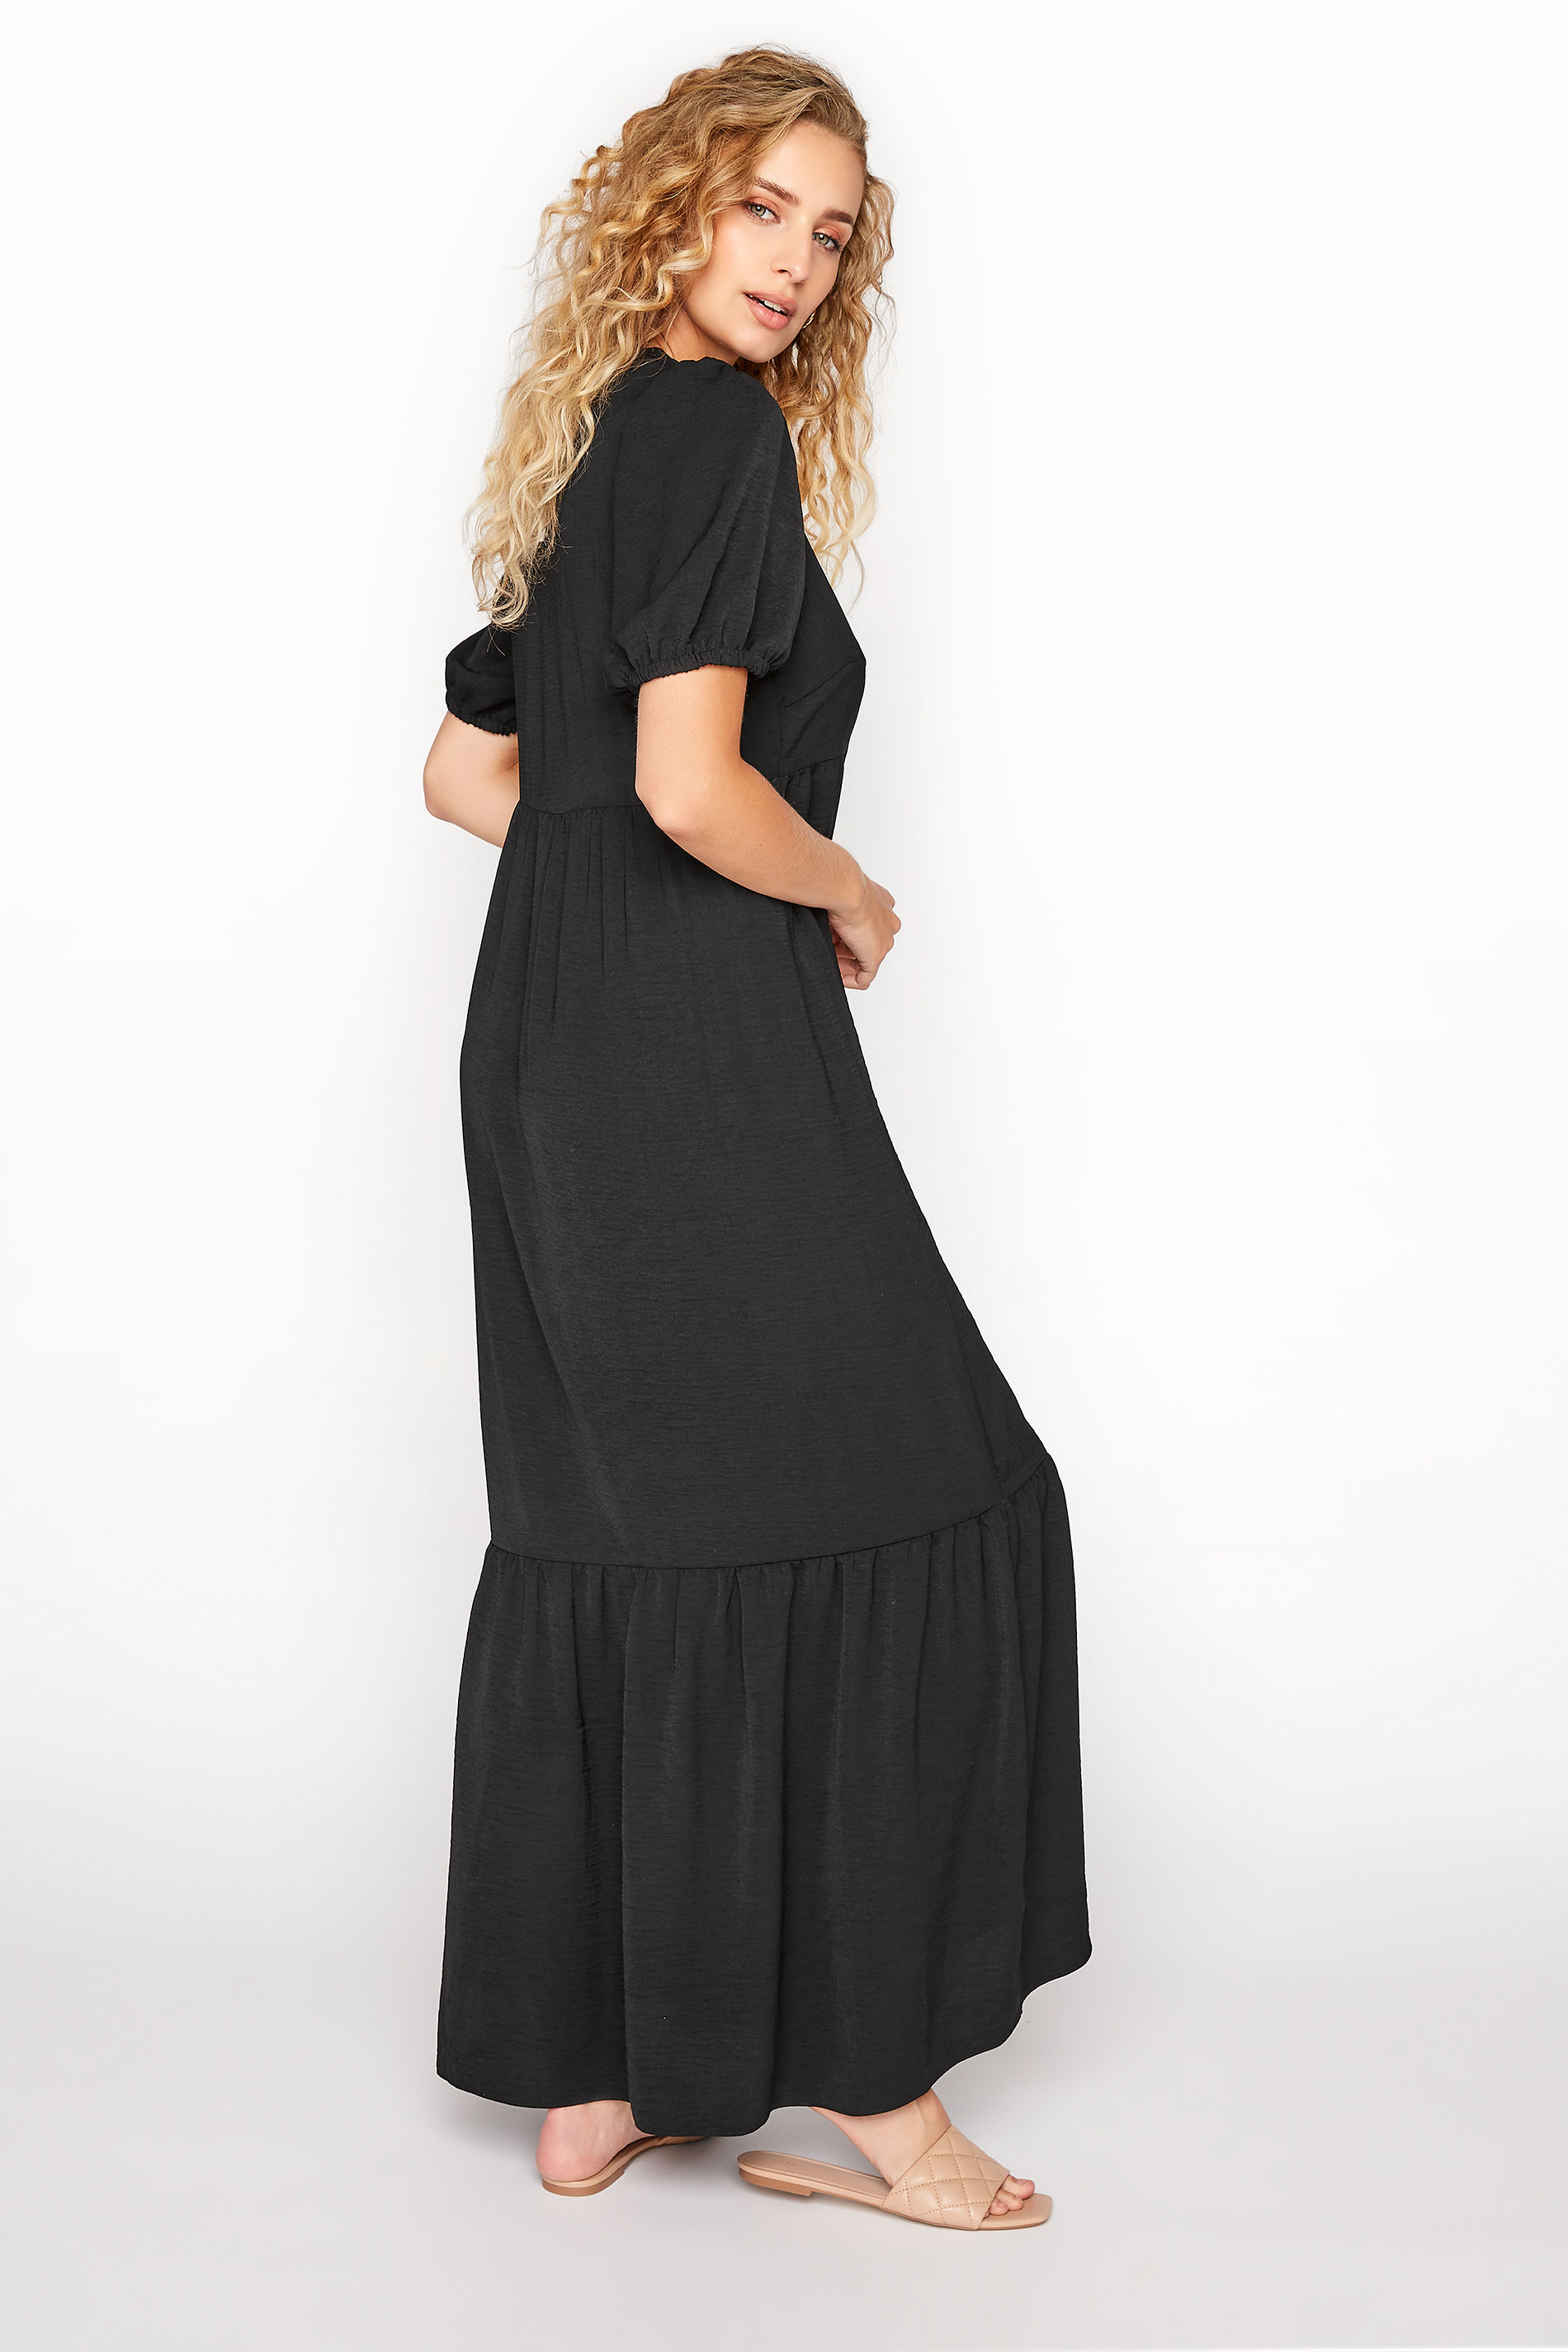 LTS Black Tiered Smock Midaxi Dress | Long Tall Sally